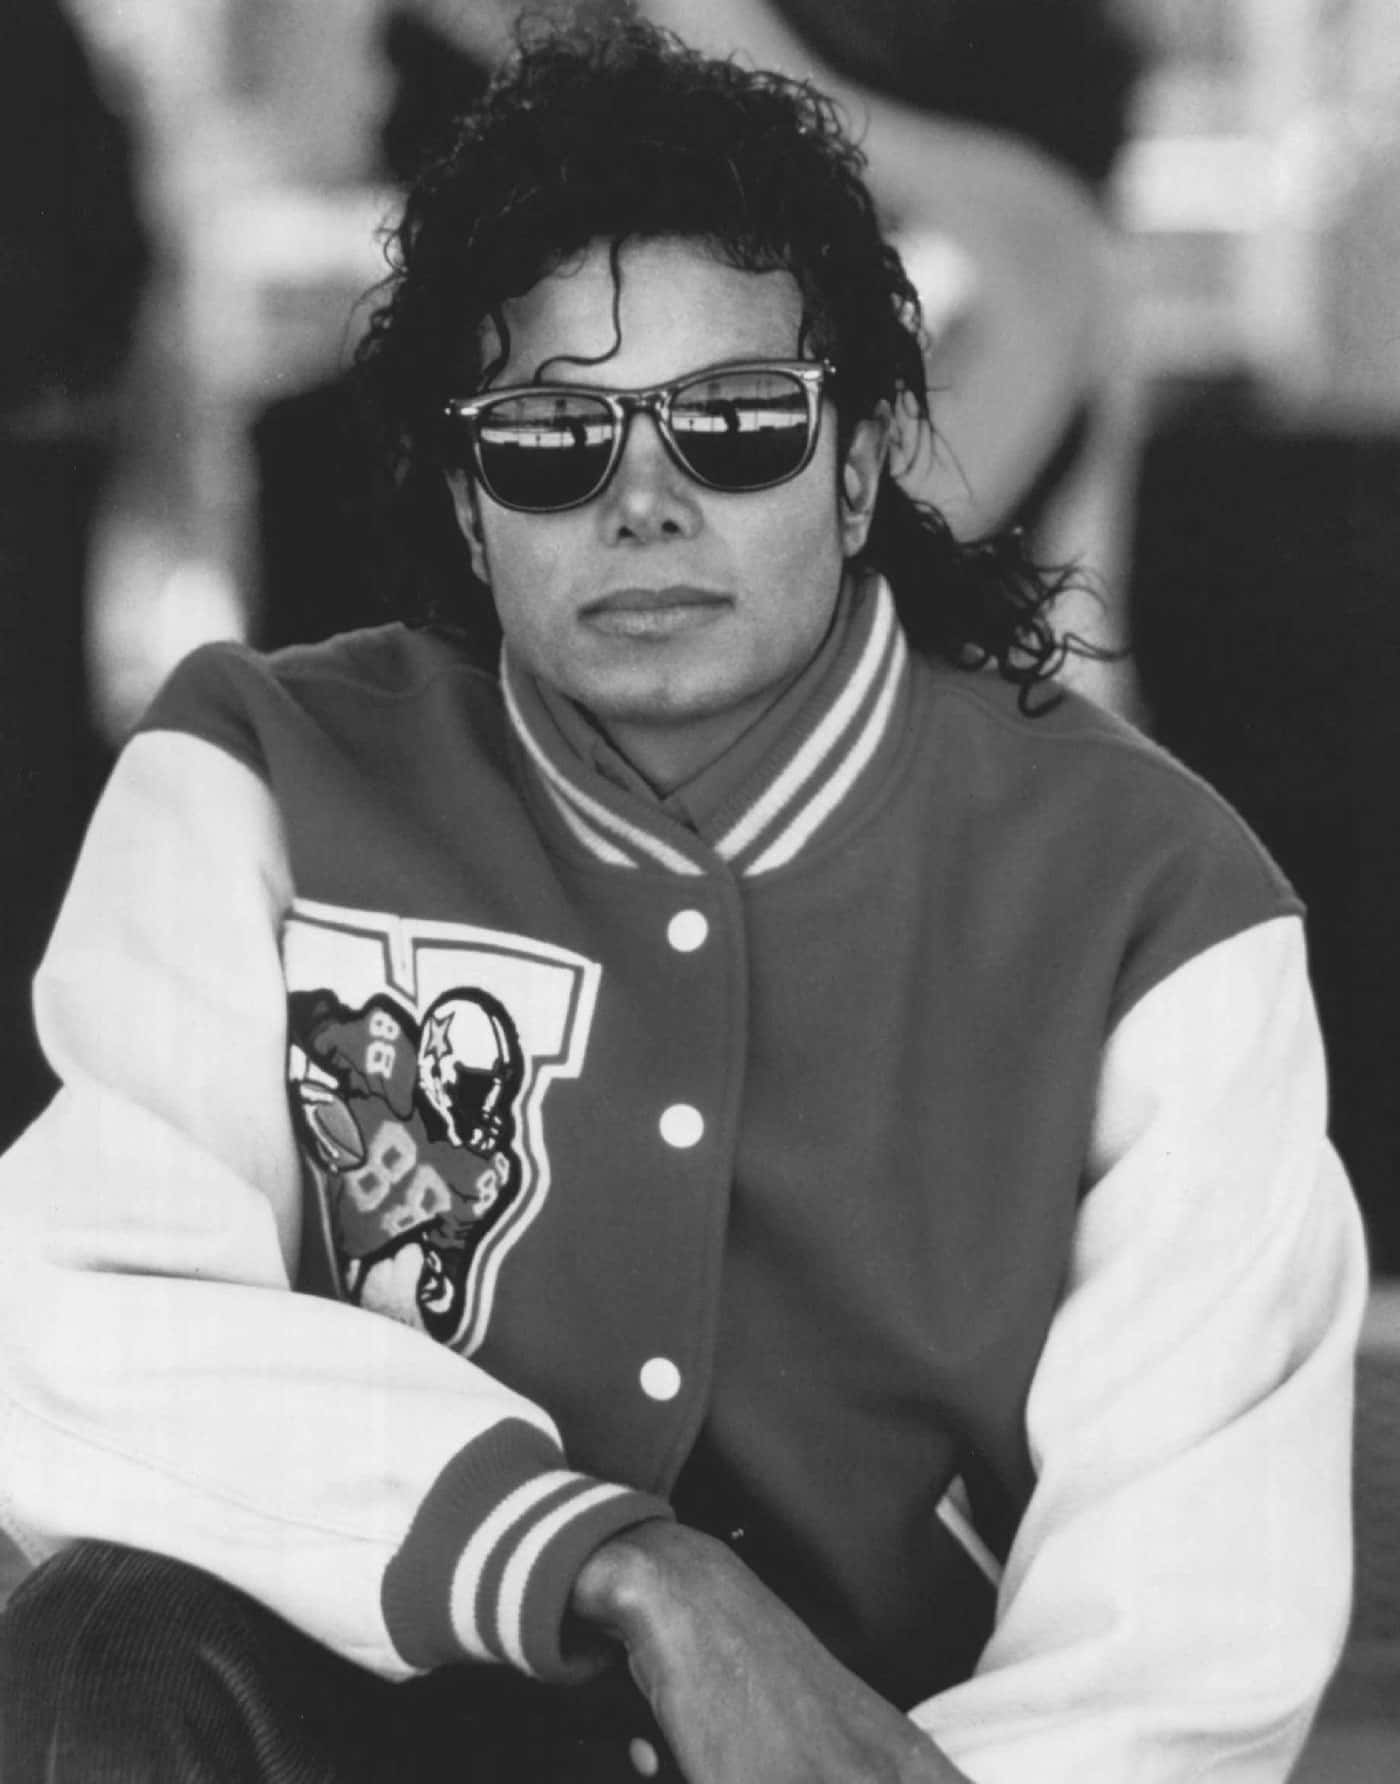 Michael Jackson Pictures